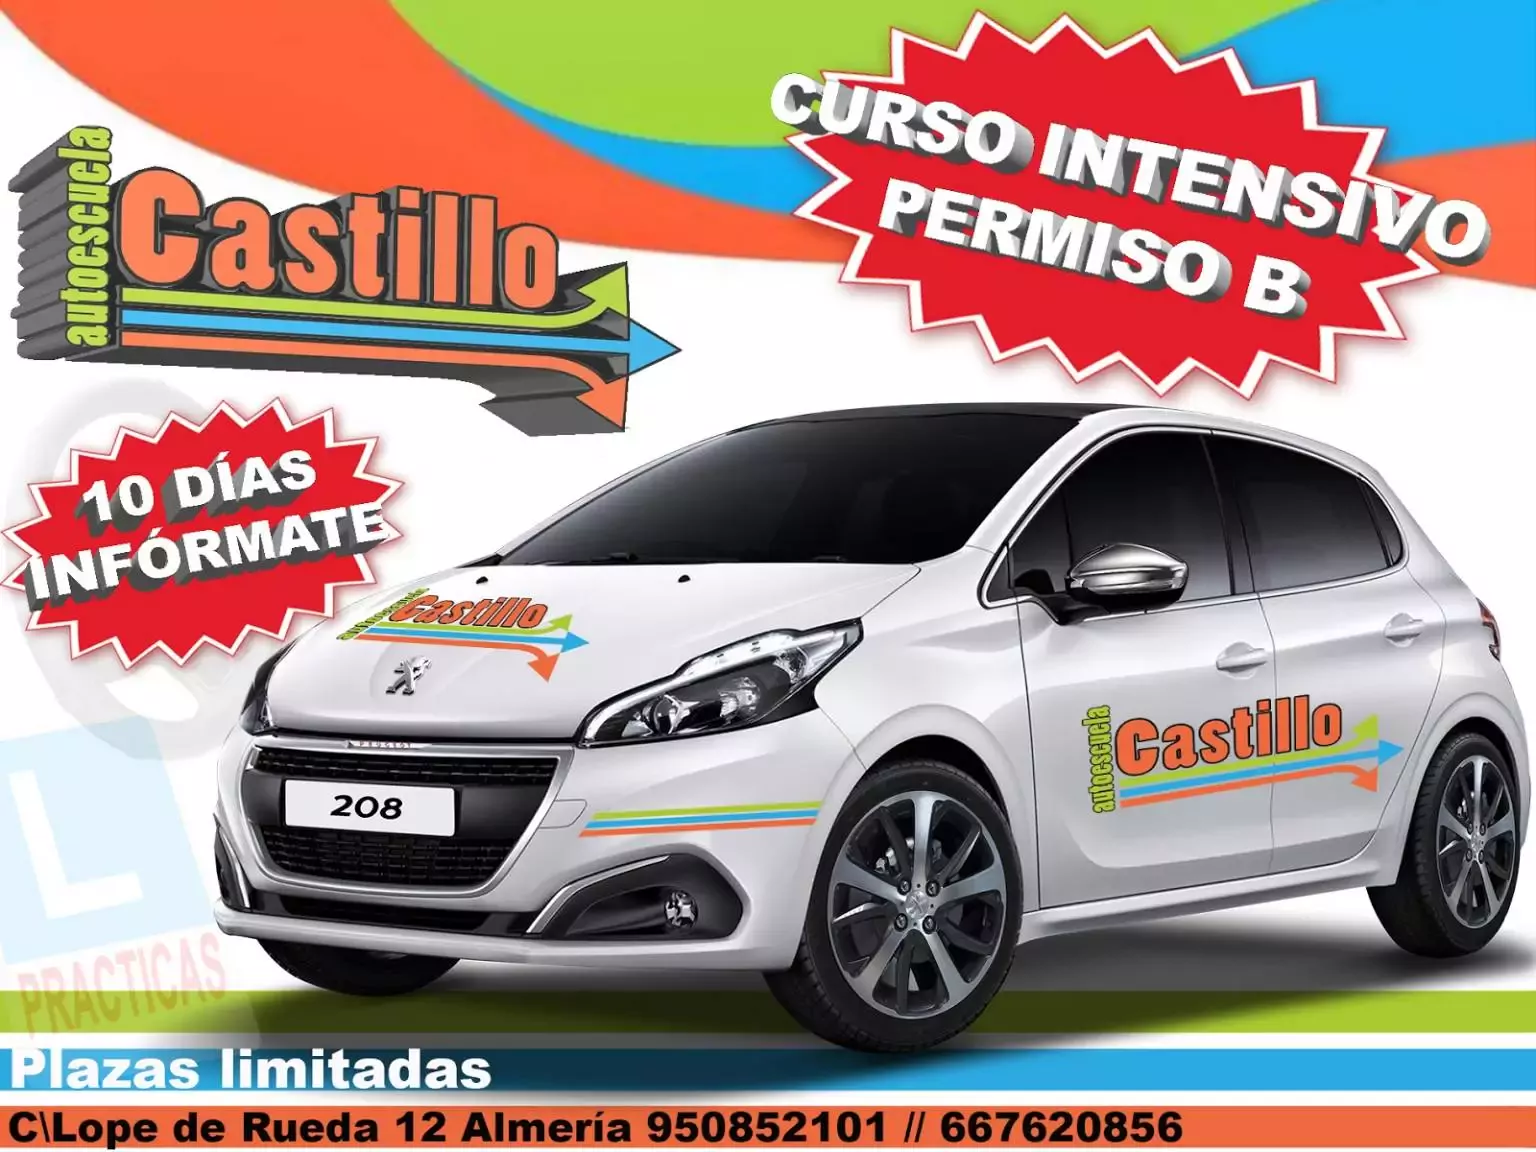 8. Autoescuela Castillo